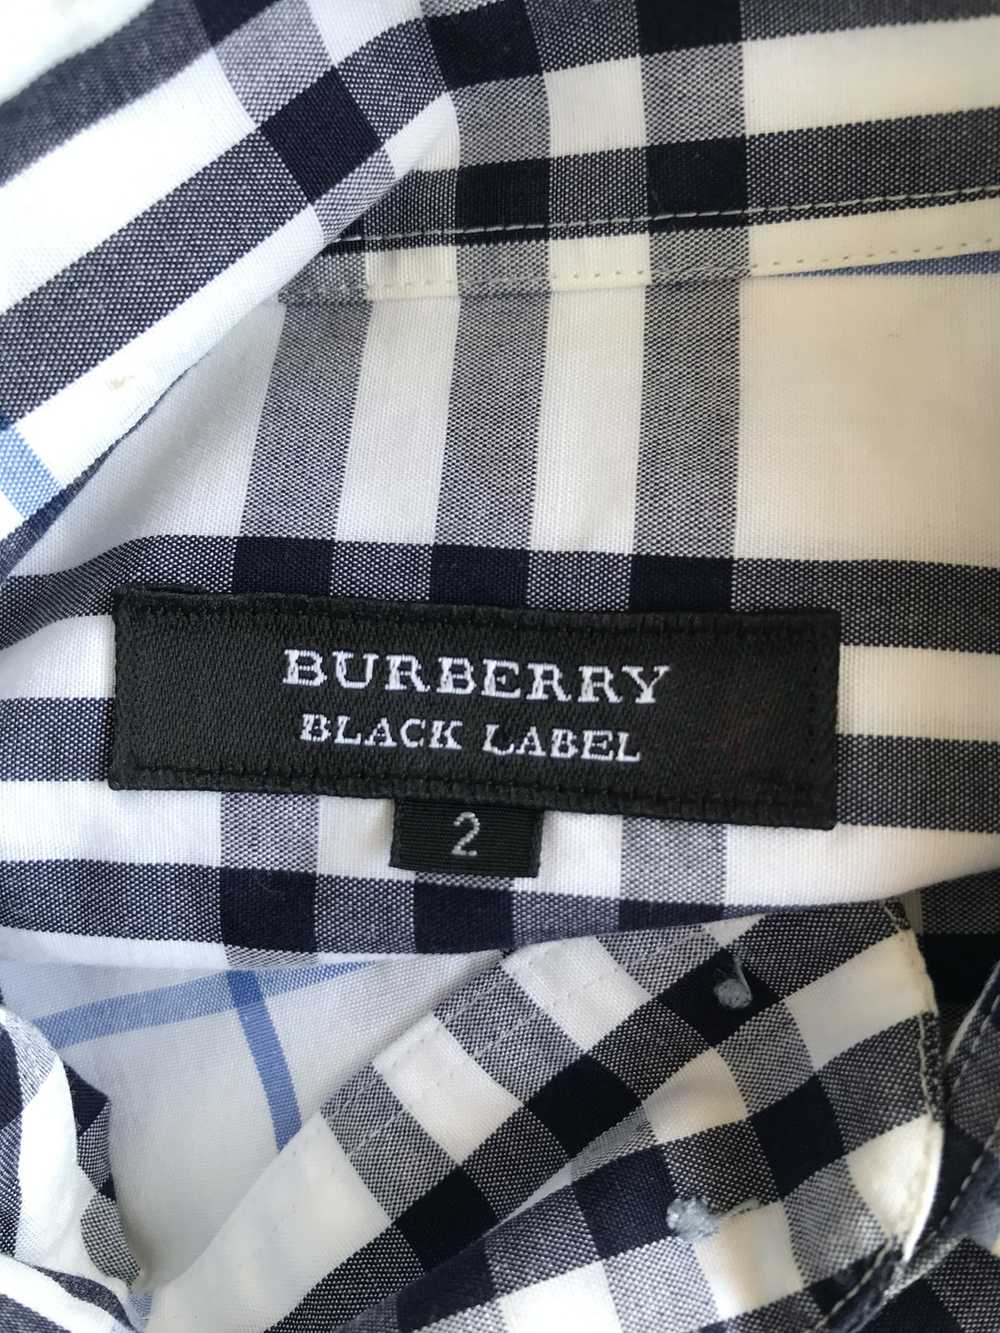 Burberry Burberry Black Label Checkered shirt - image 5